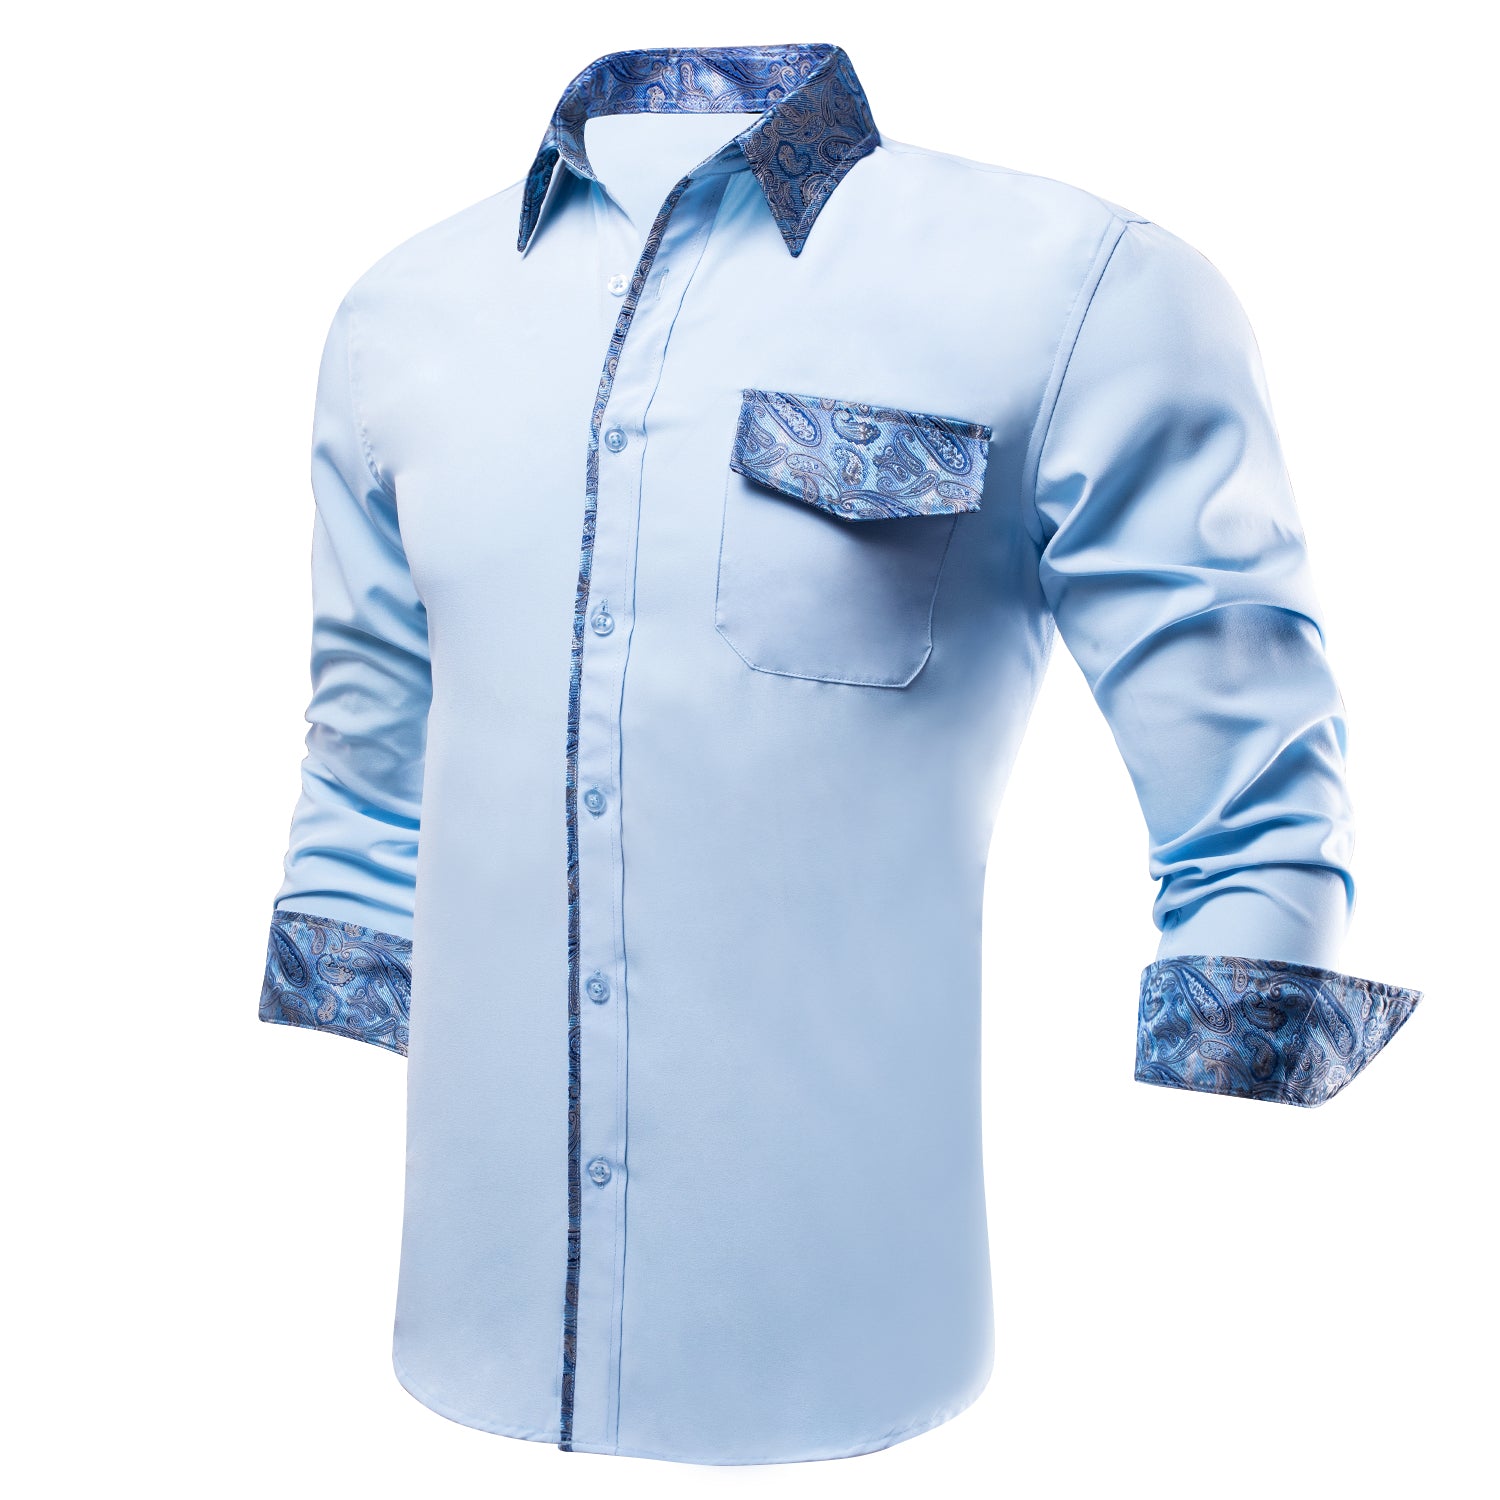 Clearance Sale New Arrival Fresh Light Blue Men's Stitching Shirt